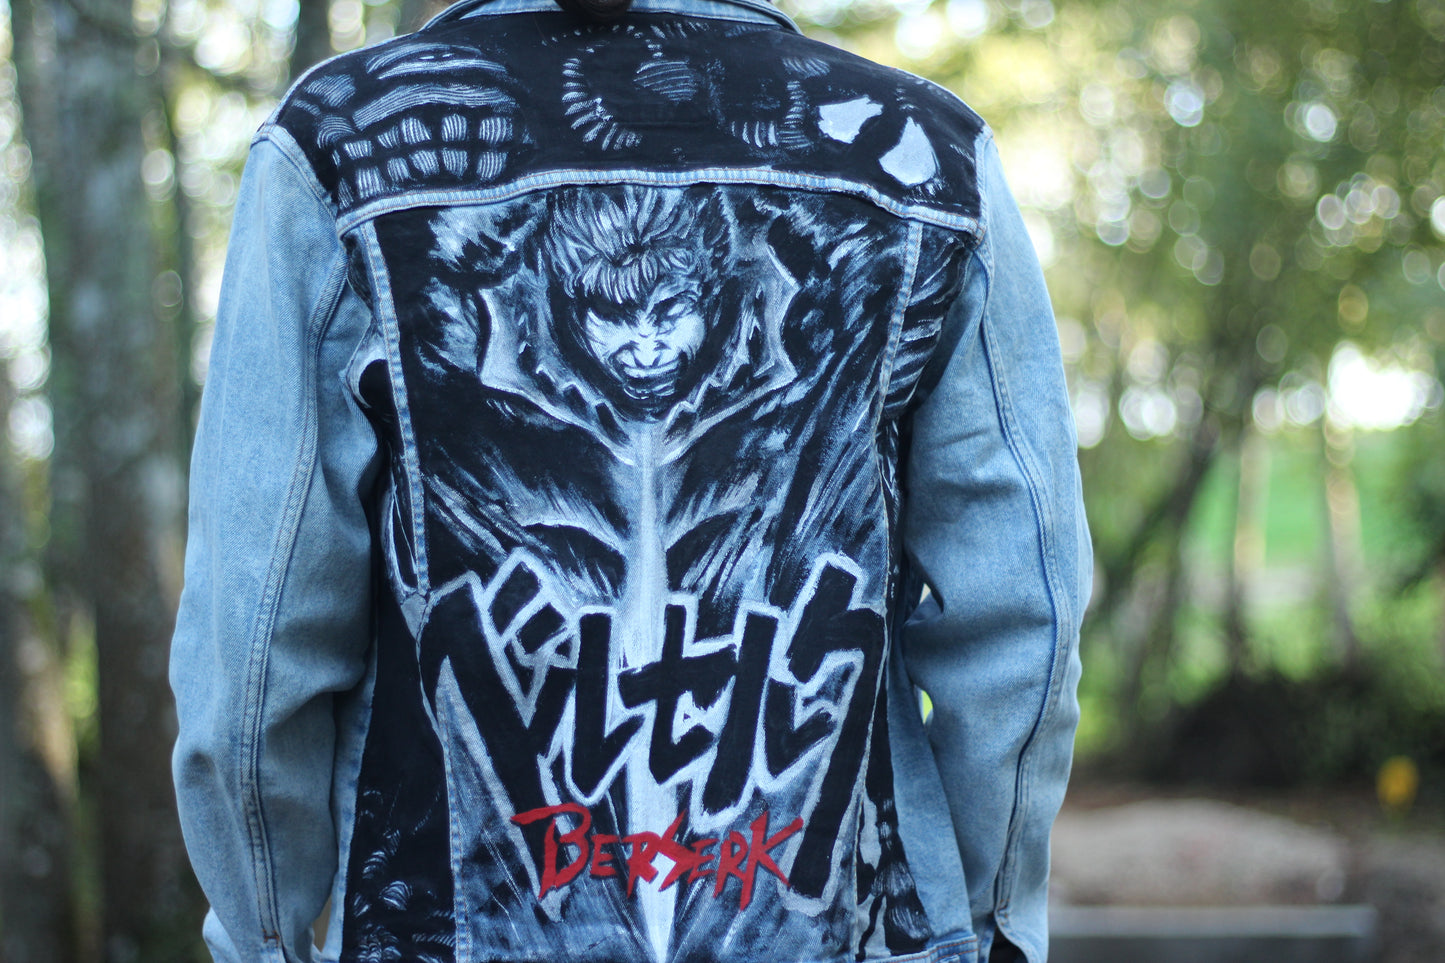 Custom Berserk Jacket - Tribute to Kentaro Miura